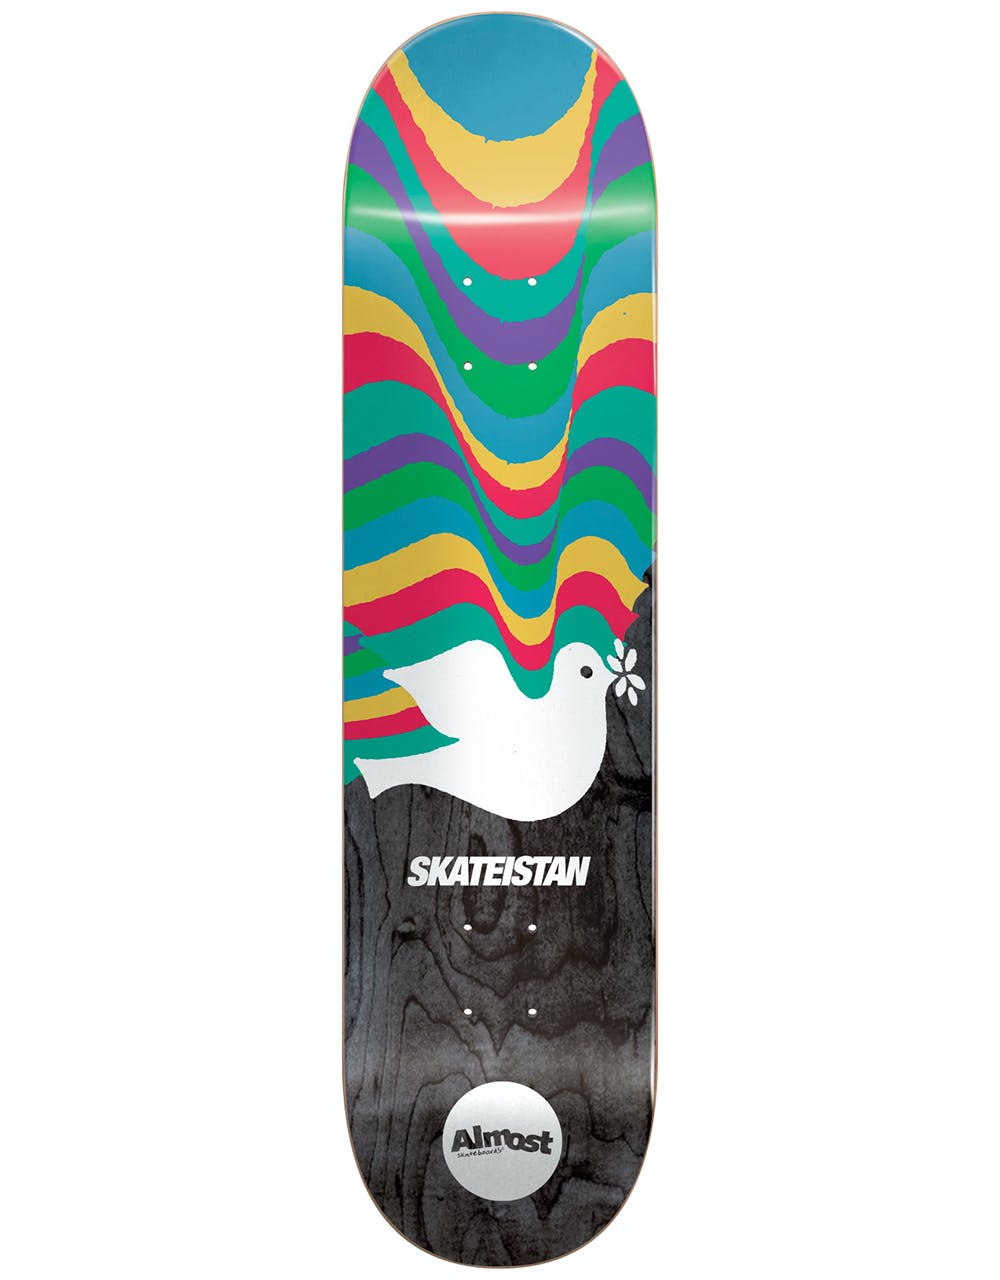 Almost Skateistan Skateboard Deck - 7.75"